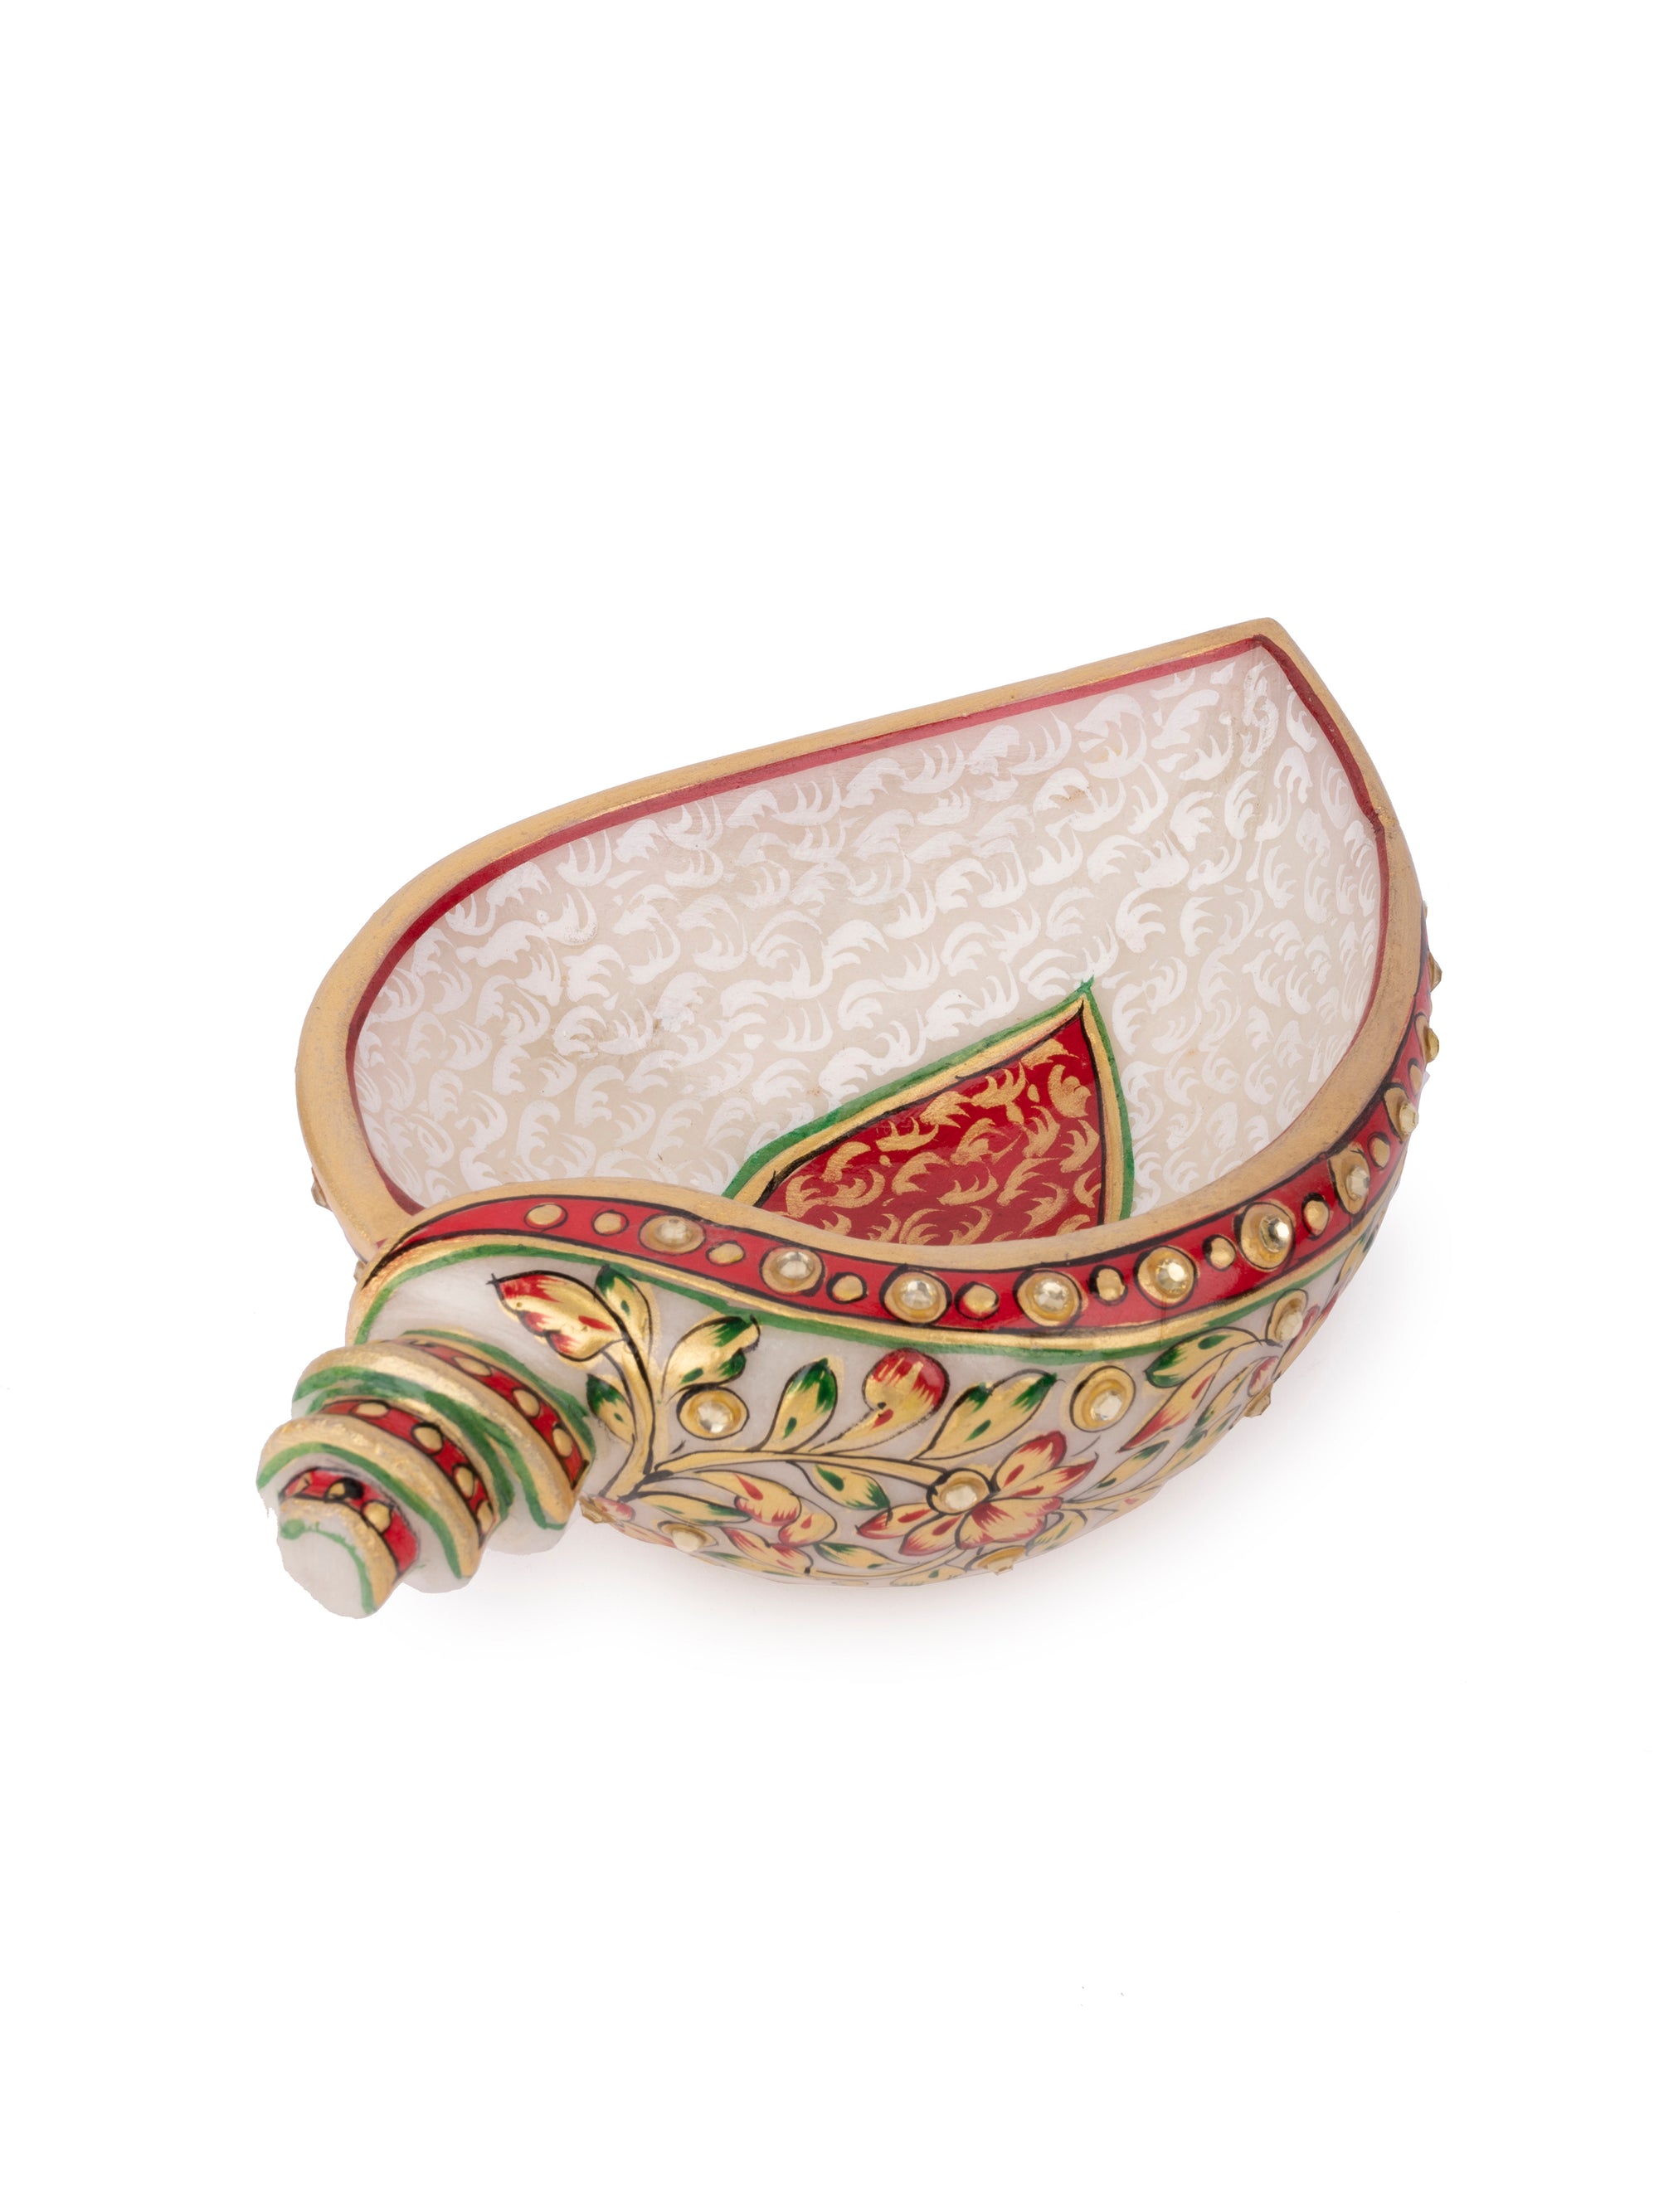 Meenakari Design Multipurpose Marble Shankh Urli / Bowl - The Heritage Artifacts